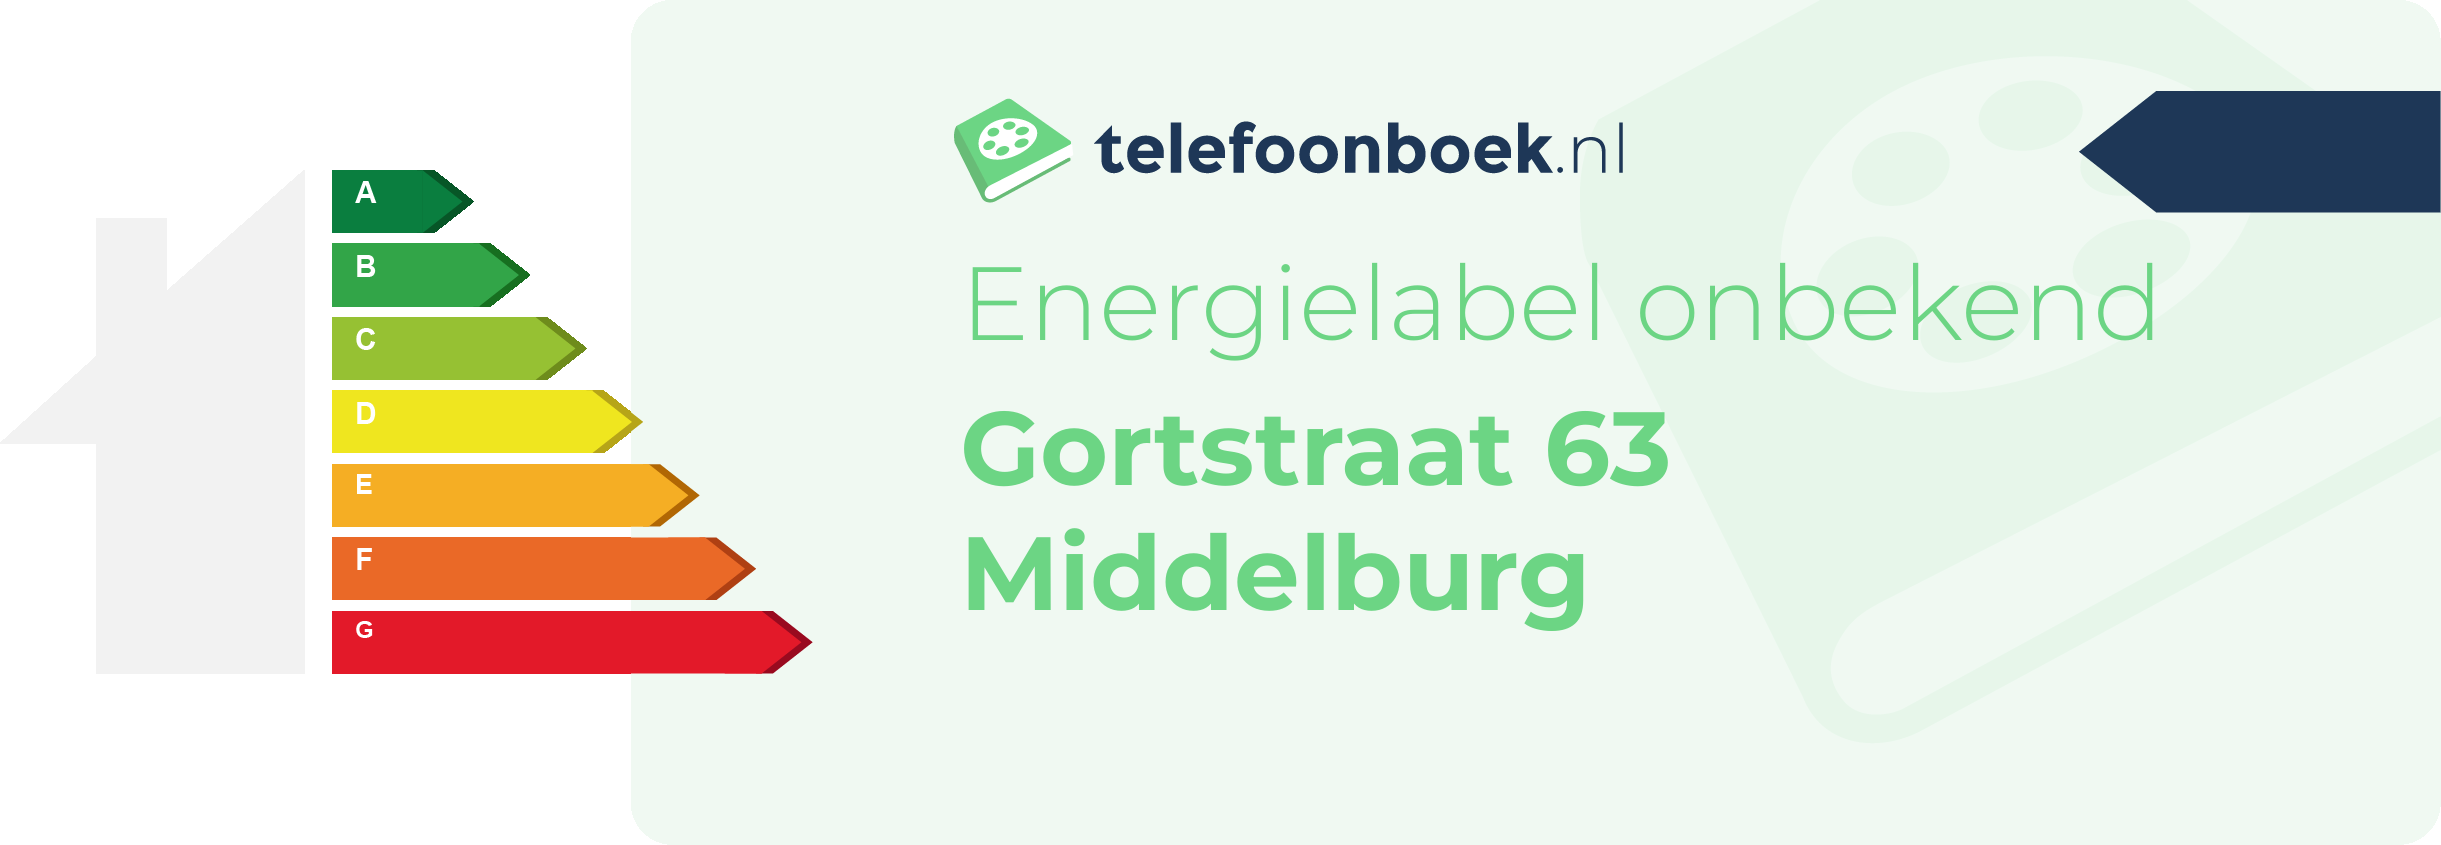 Energielabel Gortstraat 63 Middelburg